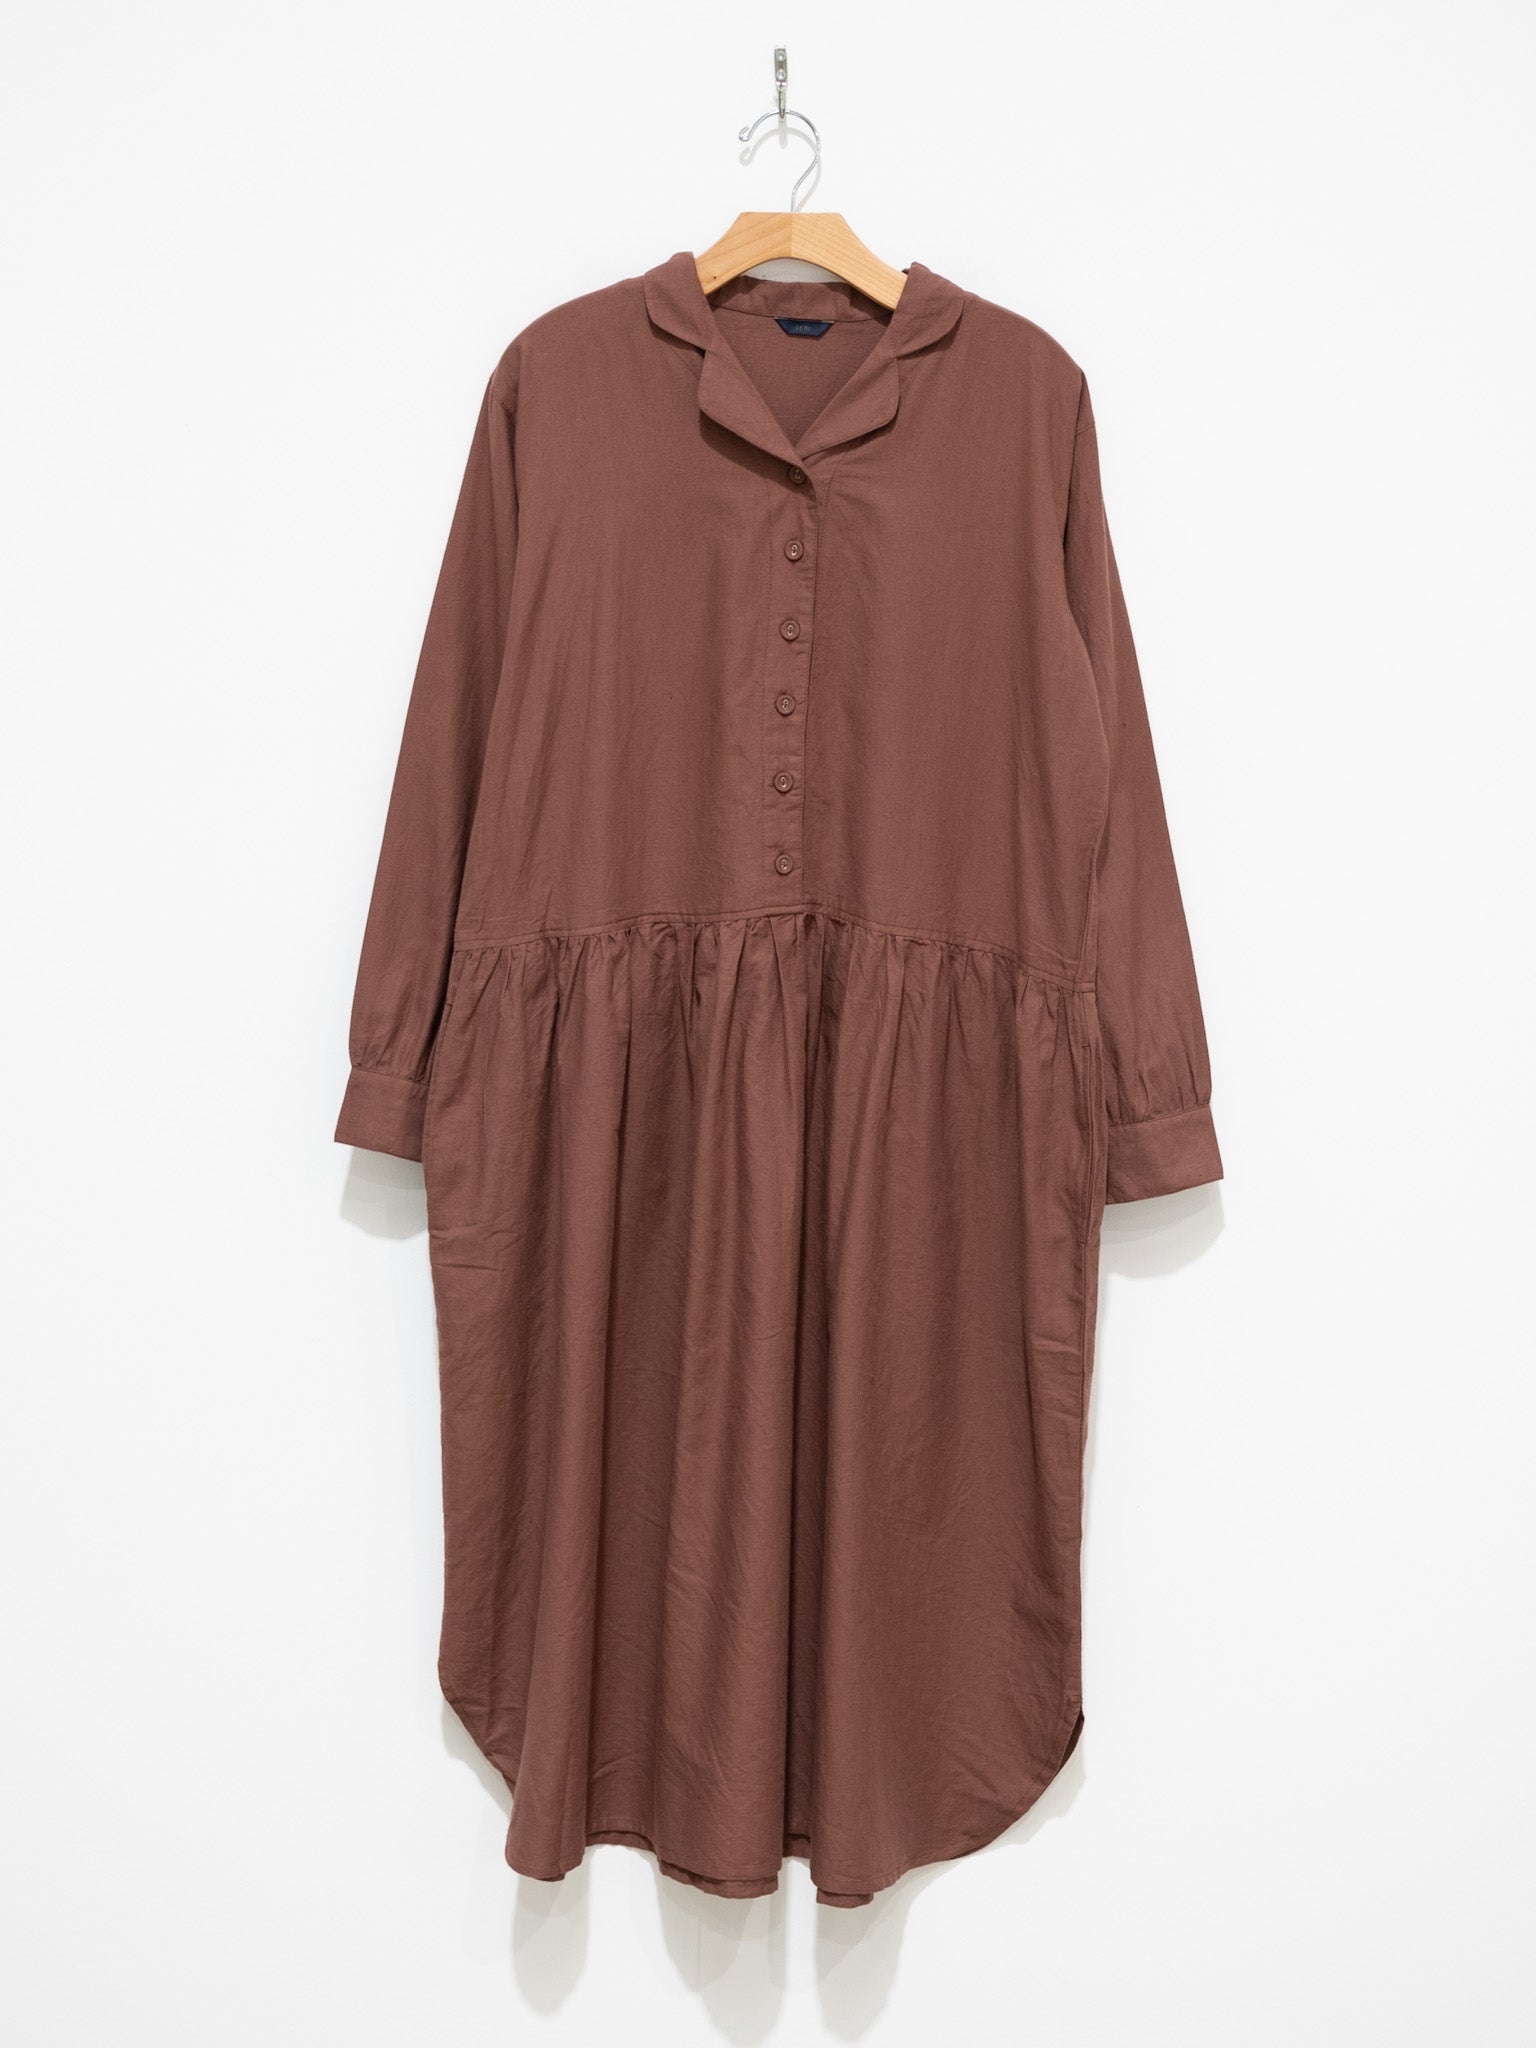 Namu Shop - ICHI Open Collar Gather Dress - Brown